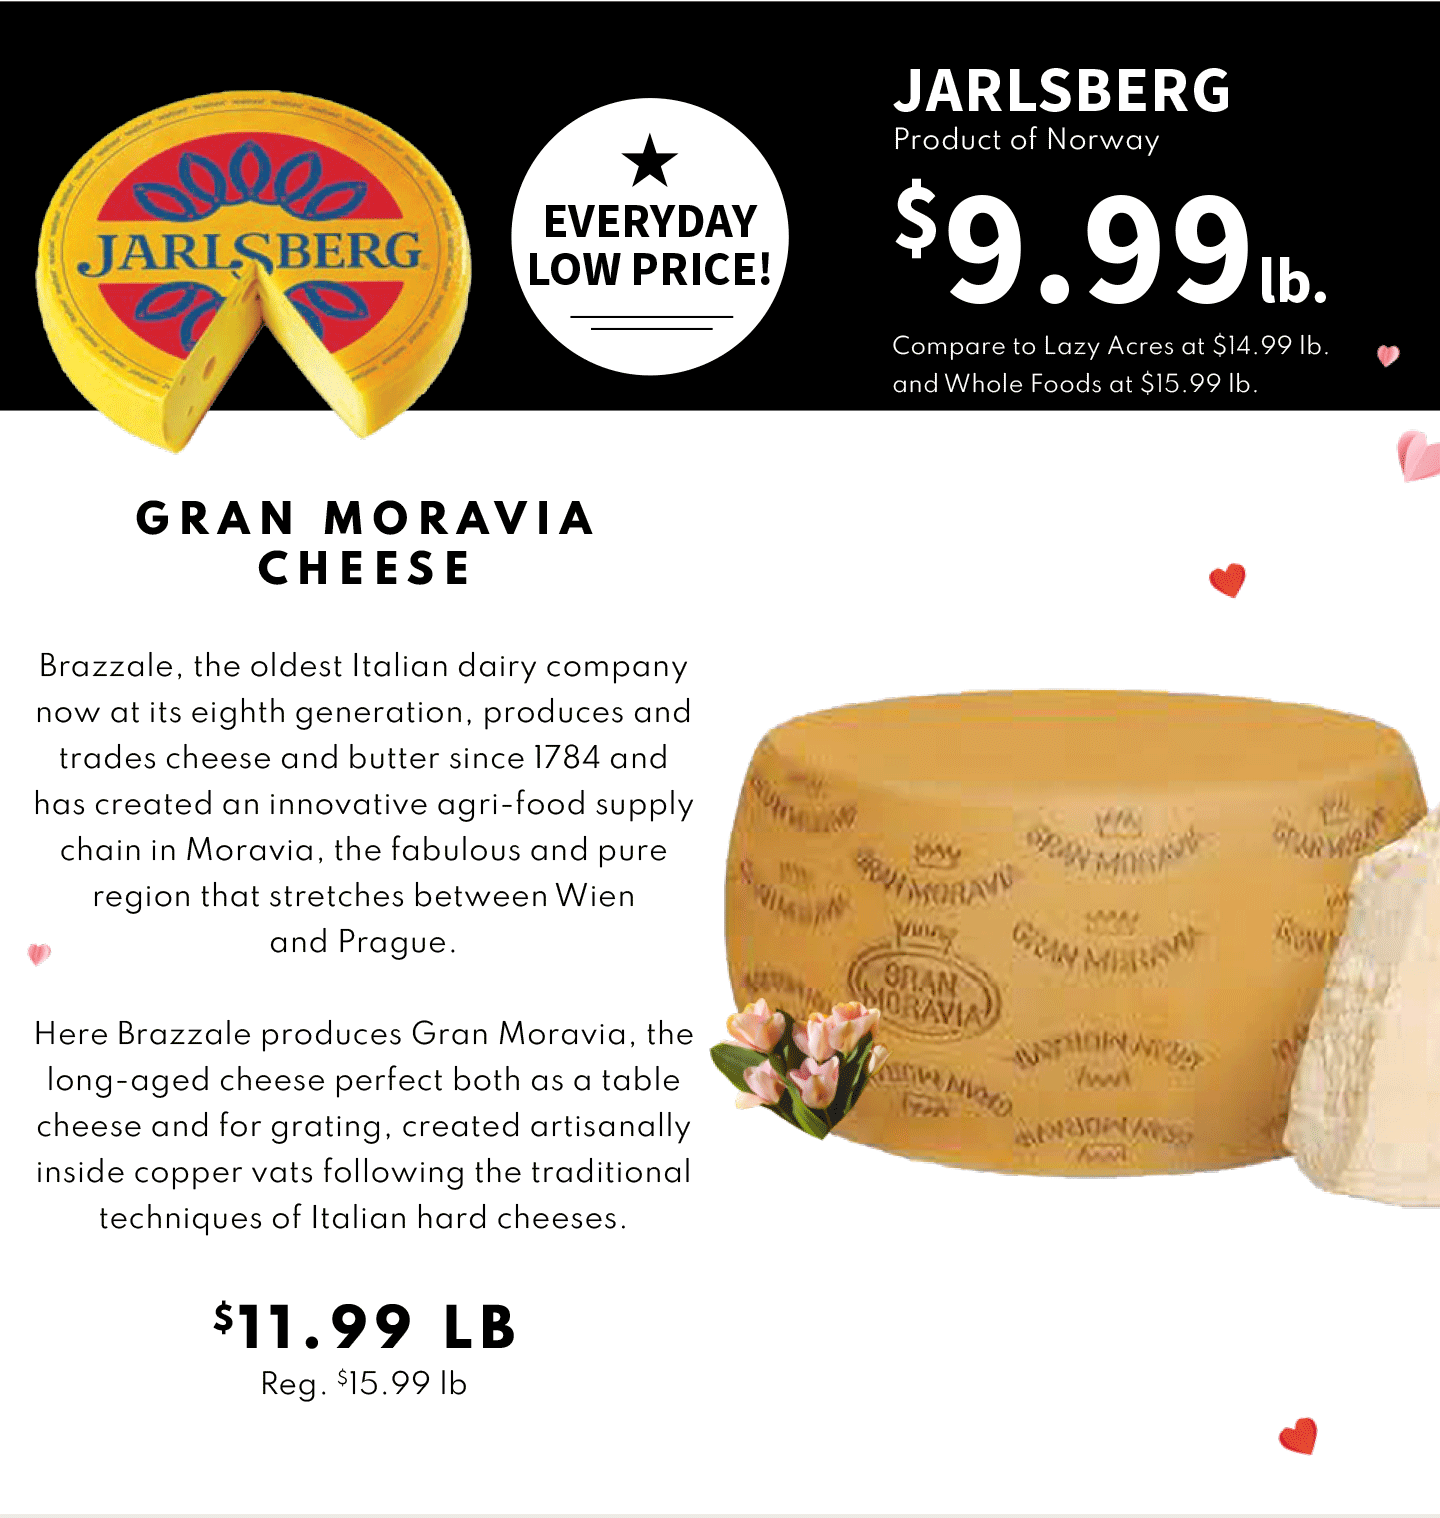 Karlsbergy $9.99 lb, and Gran Moravia Cheese $11.99 lb